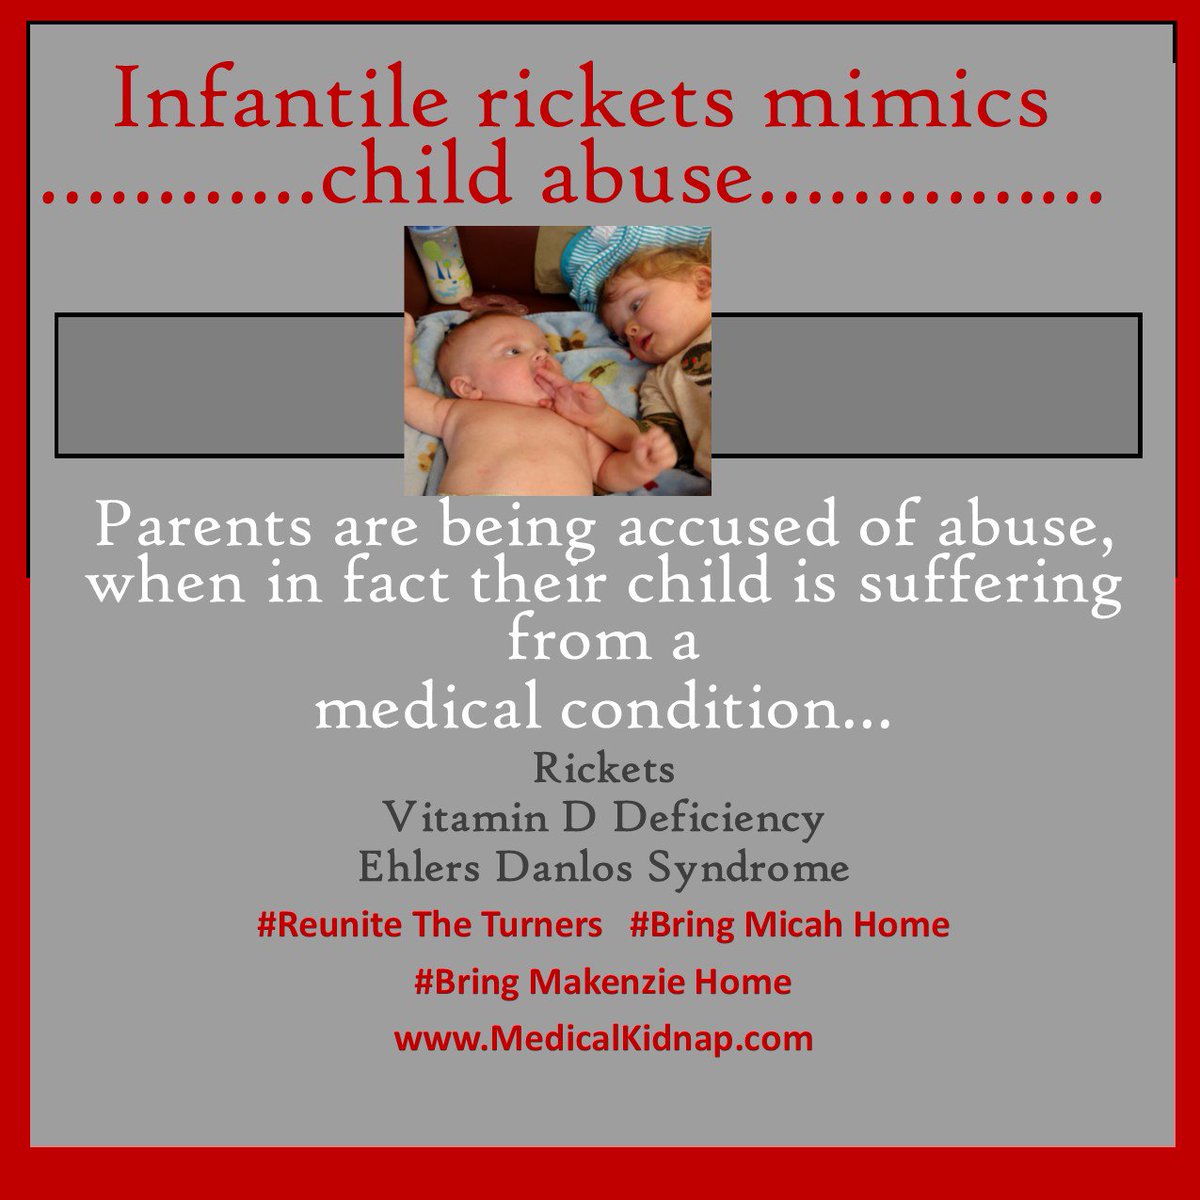 .@AmyKlobuchar Infantile #rickets mimics child abuse. #ChildAbusePediatrician's testimonies are incarcerating innocent parents!